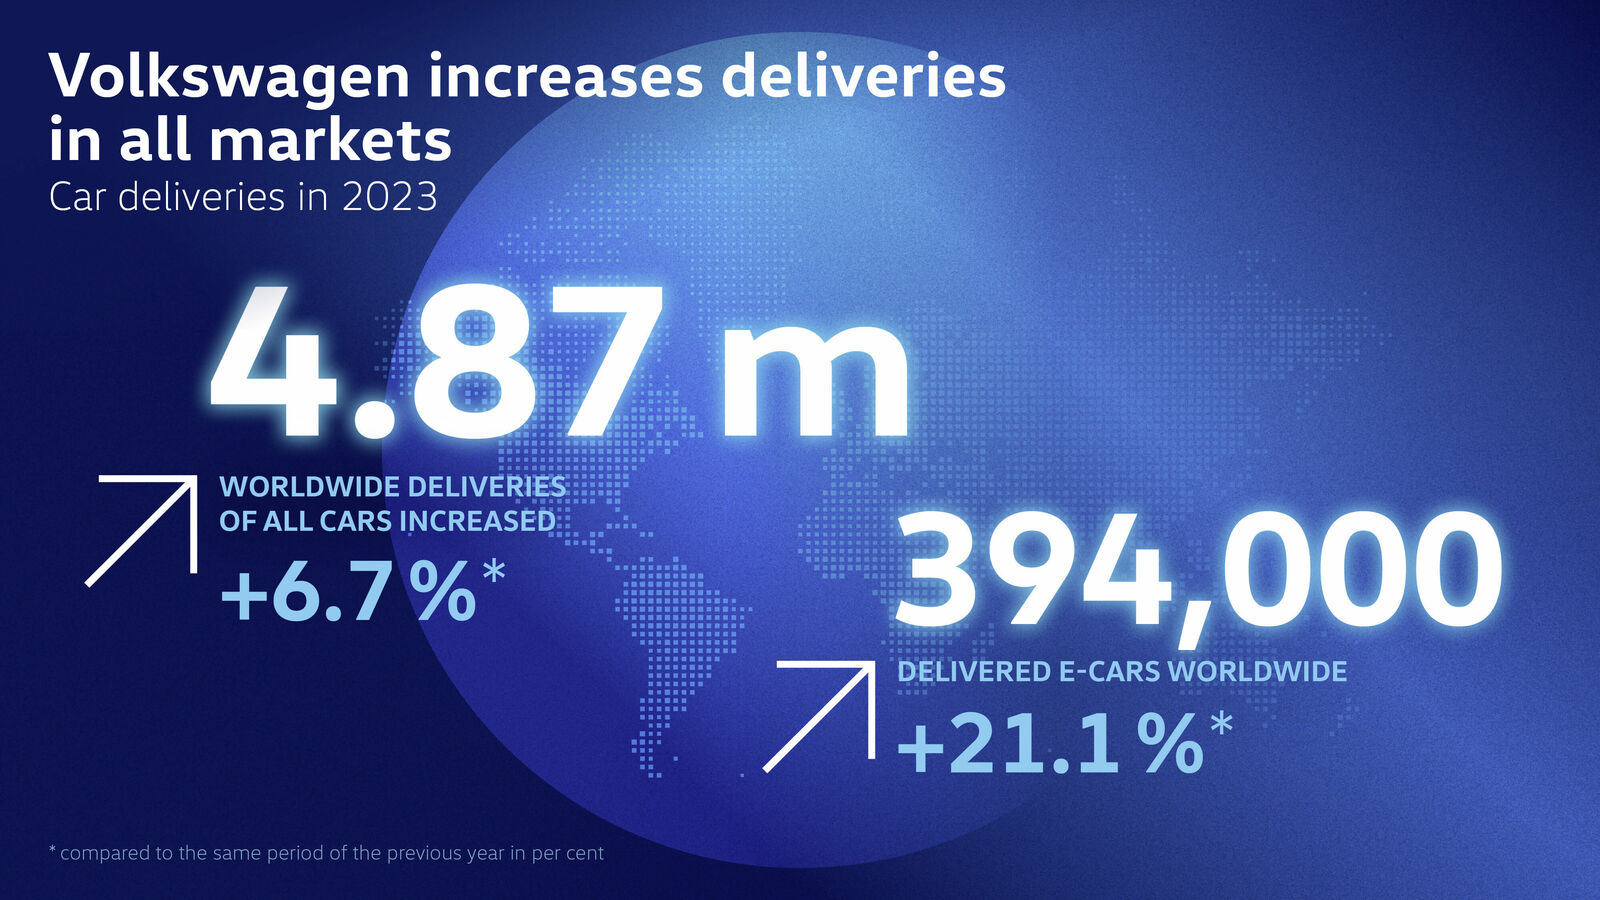 Around 4.87 million vehicles worldwide: Volkswagen brand increases deliveries in 2023